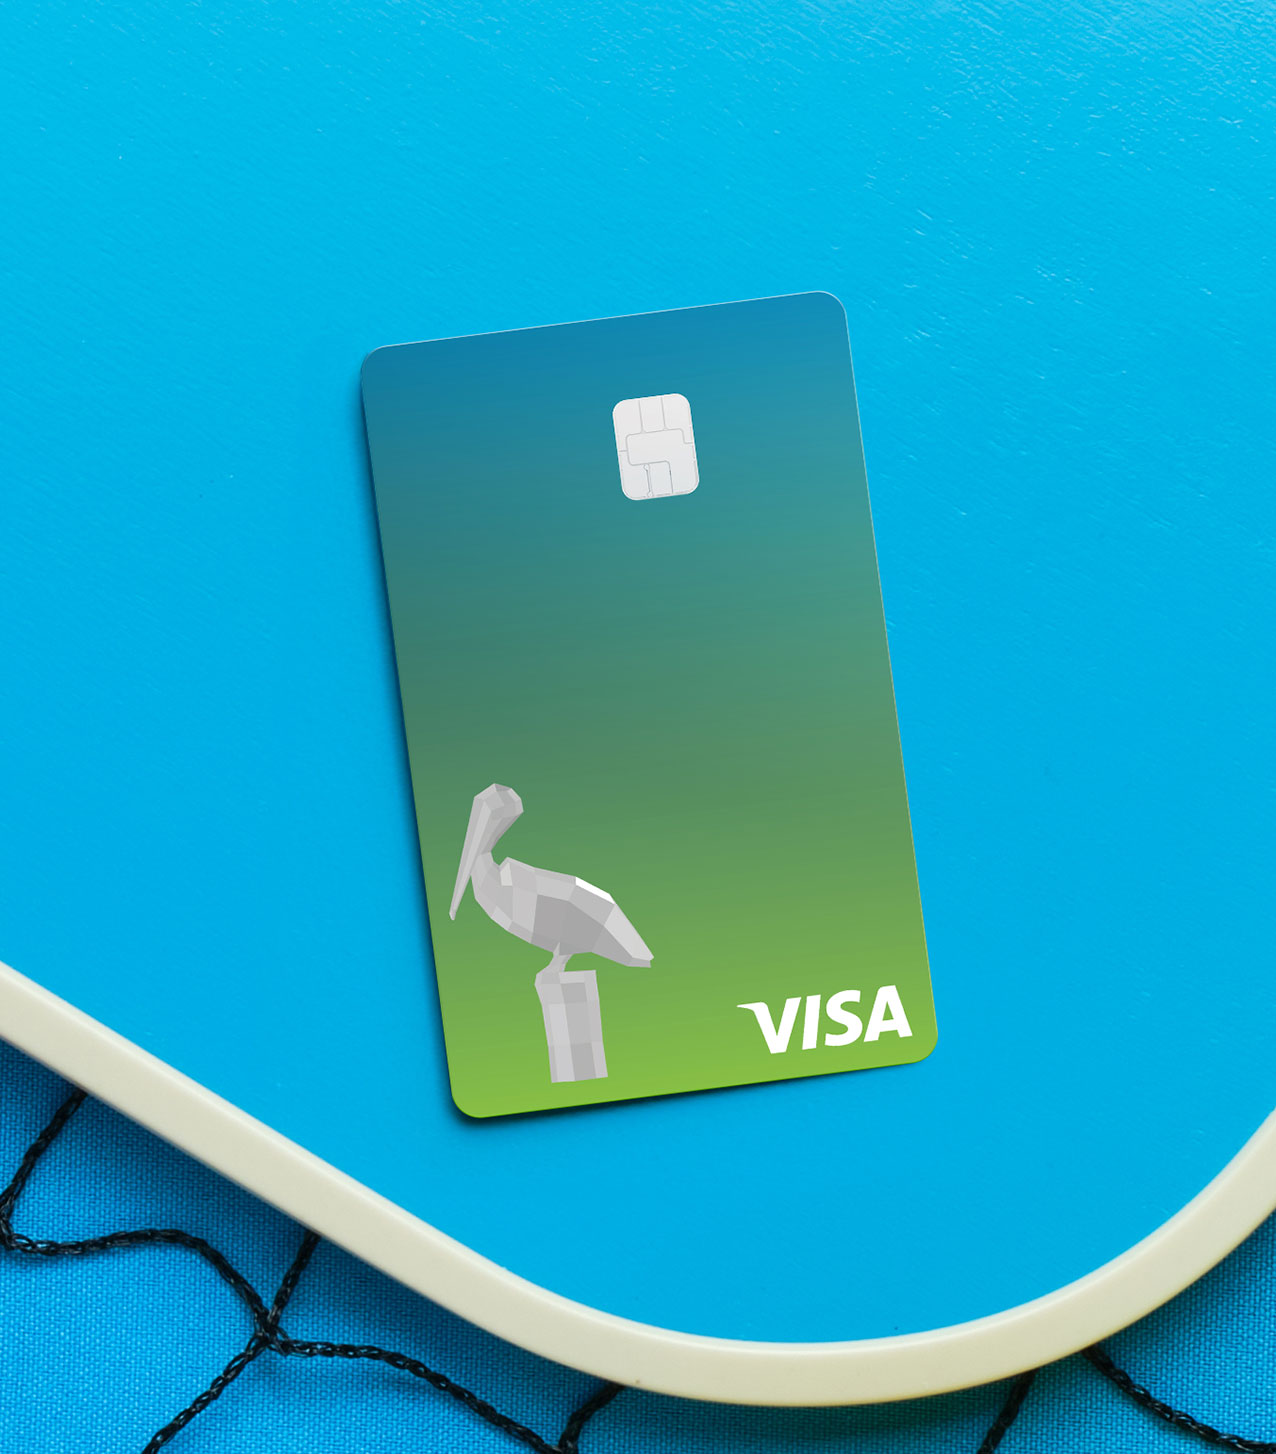 Student Visa Credit Card on a Paddleball Paddle